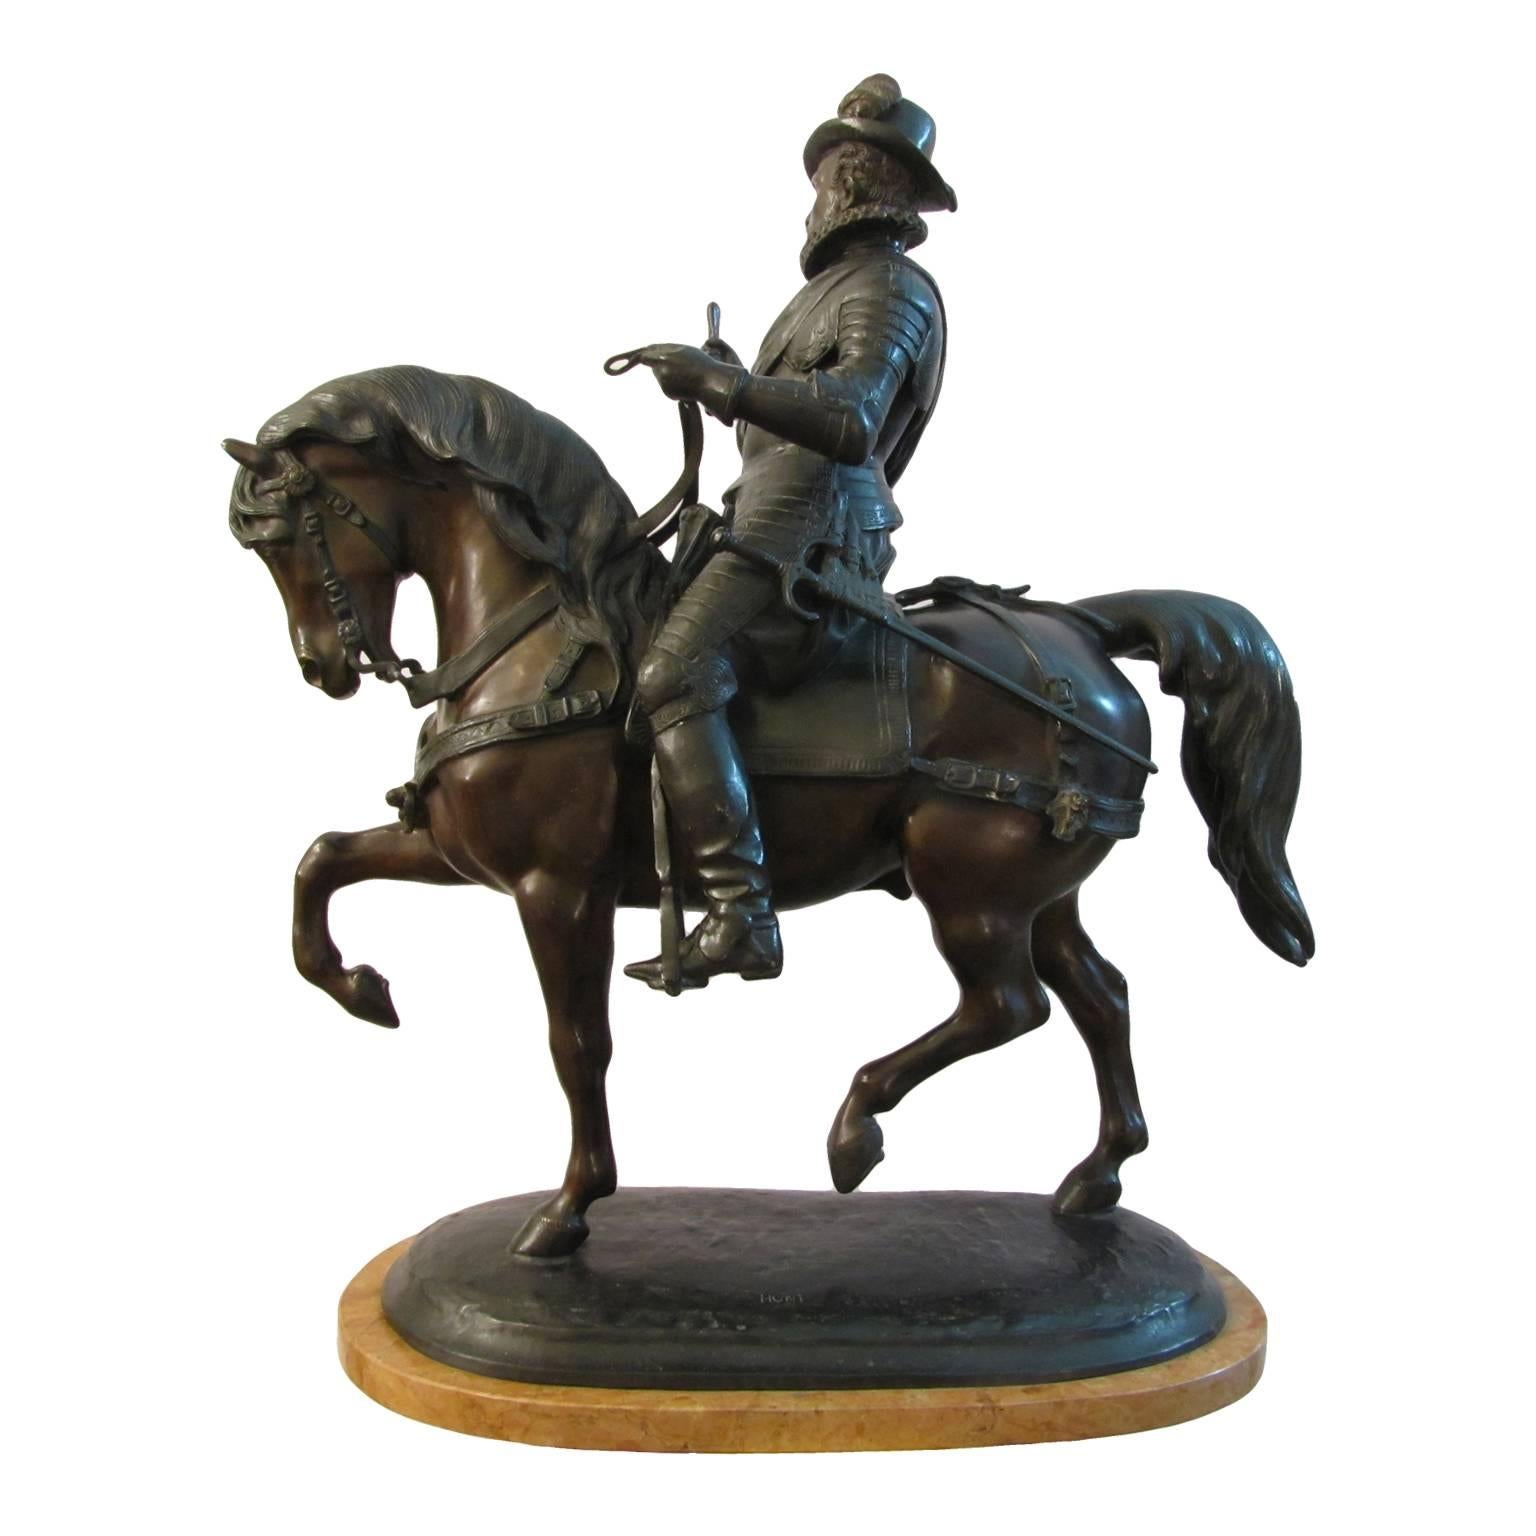 English British 19th Century Equestrian Statue Depicting Philip II of Spain in Bronze